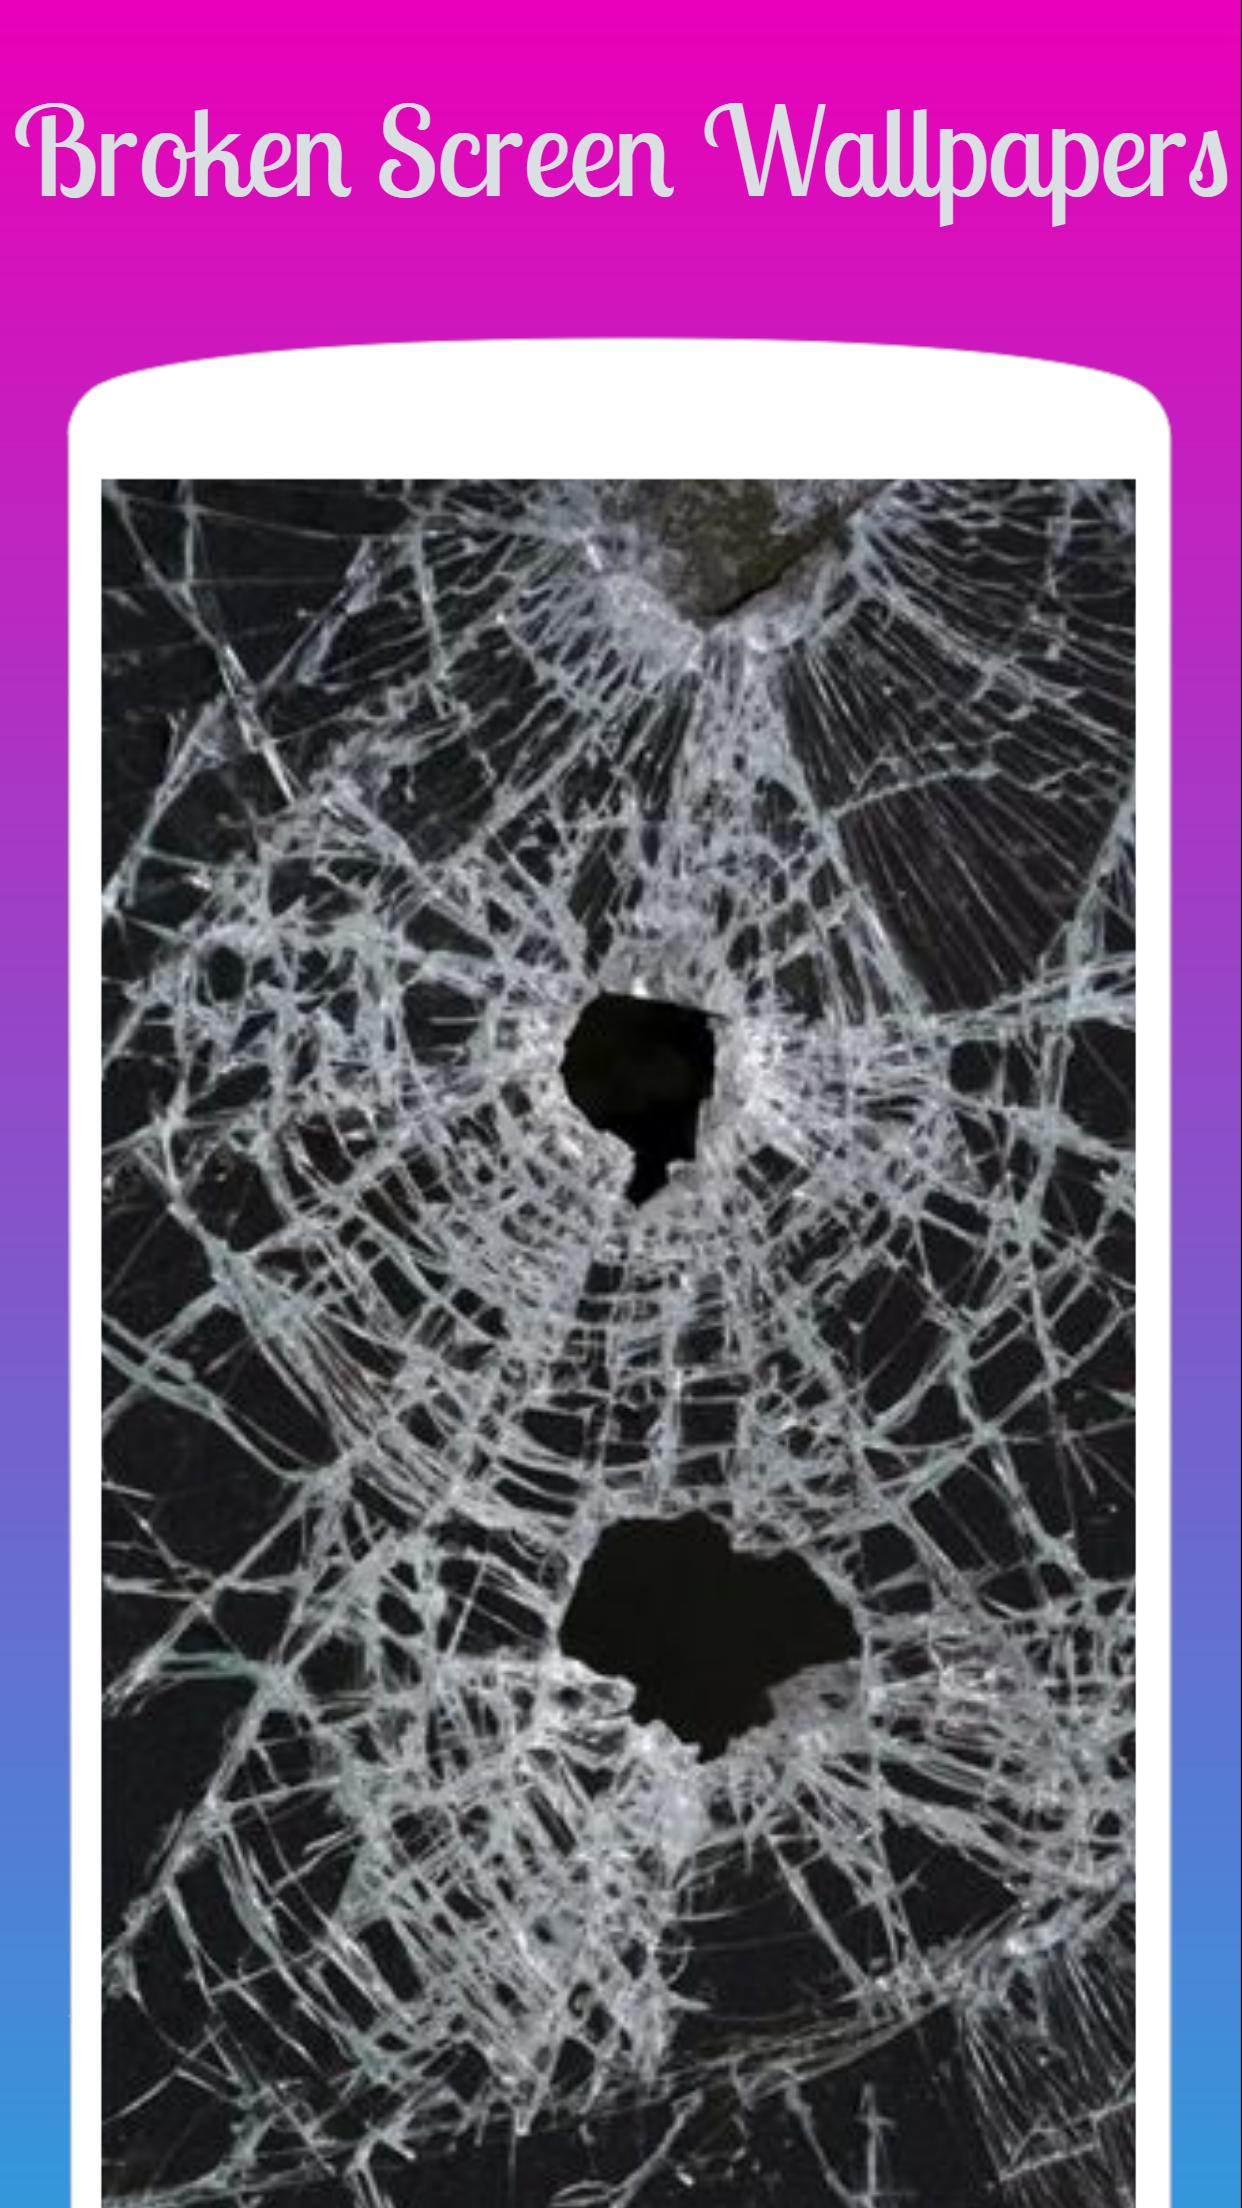 Картинка разбитого телефона на весь экран. Разбитое стекло. Разбитый монитор. Снимок разбитого экрана. Трещина на стекле.